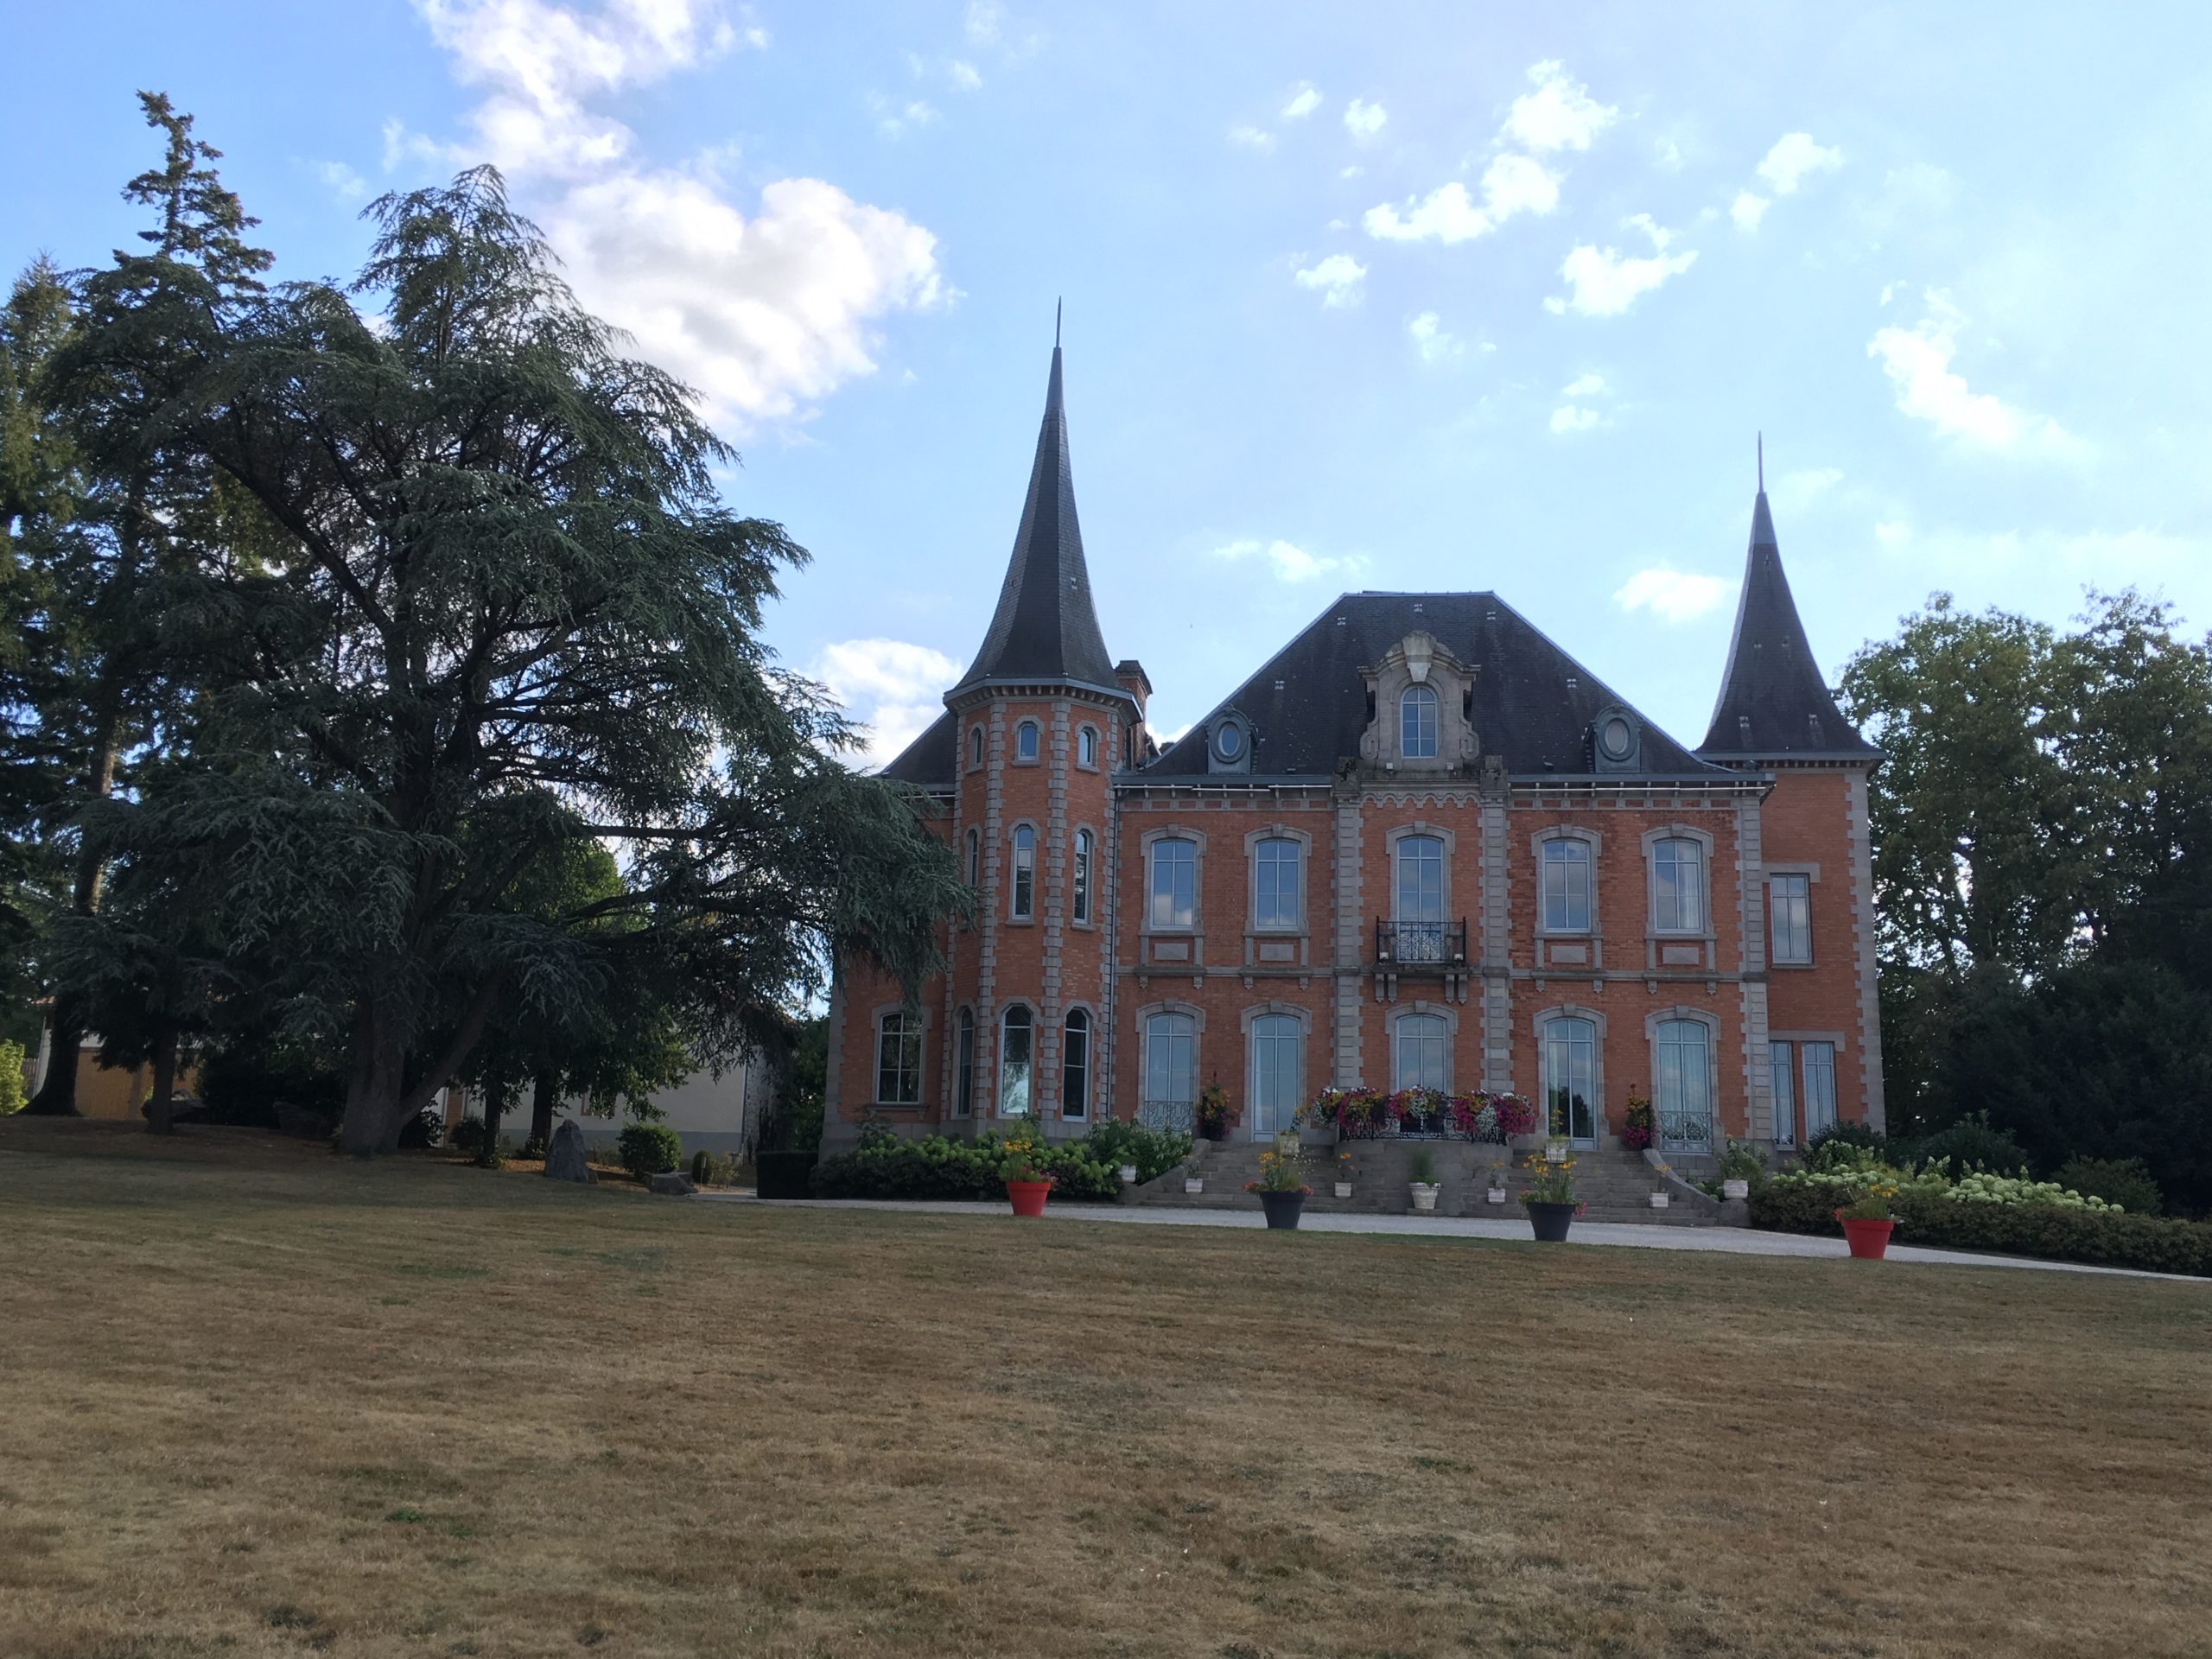 Château Du Boucheron - Bnico / CC BY-SA (https://creativecommons.org/licenses/by-sa/3.0)